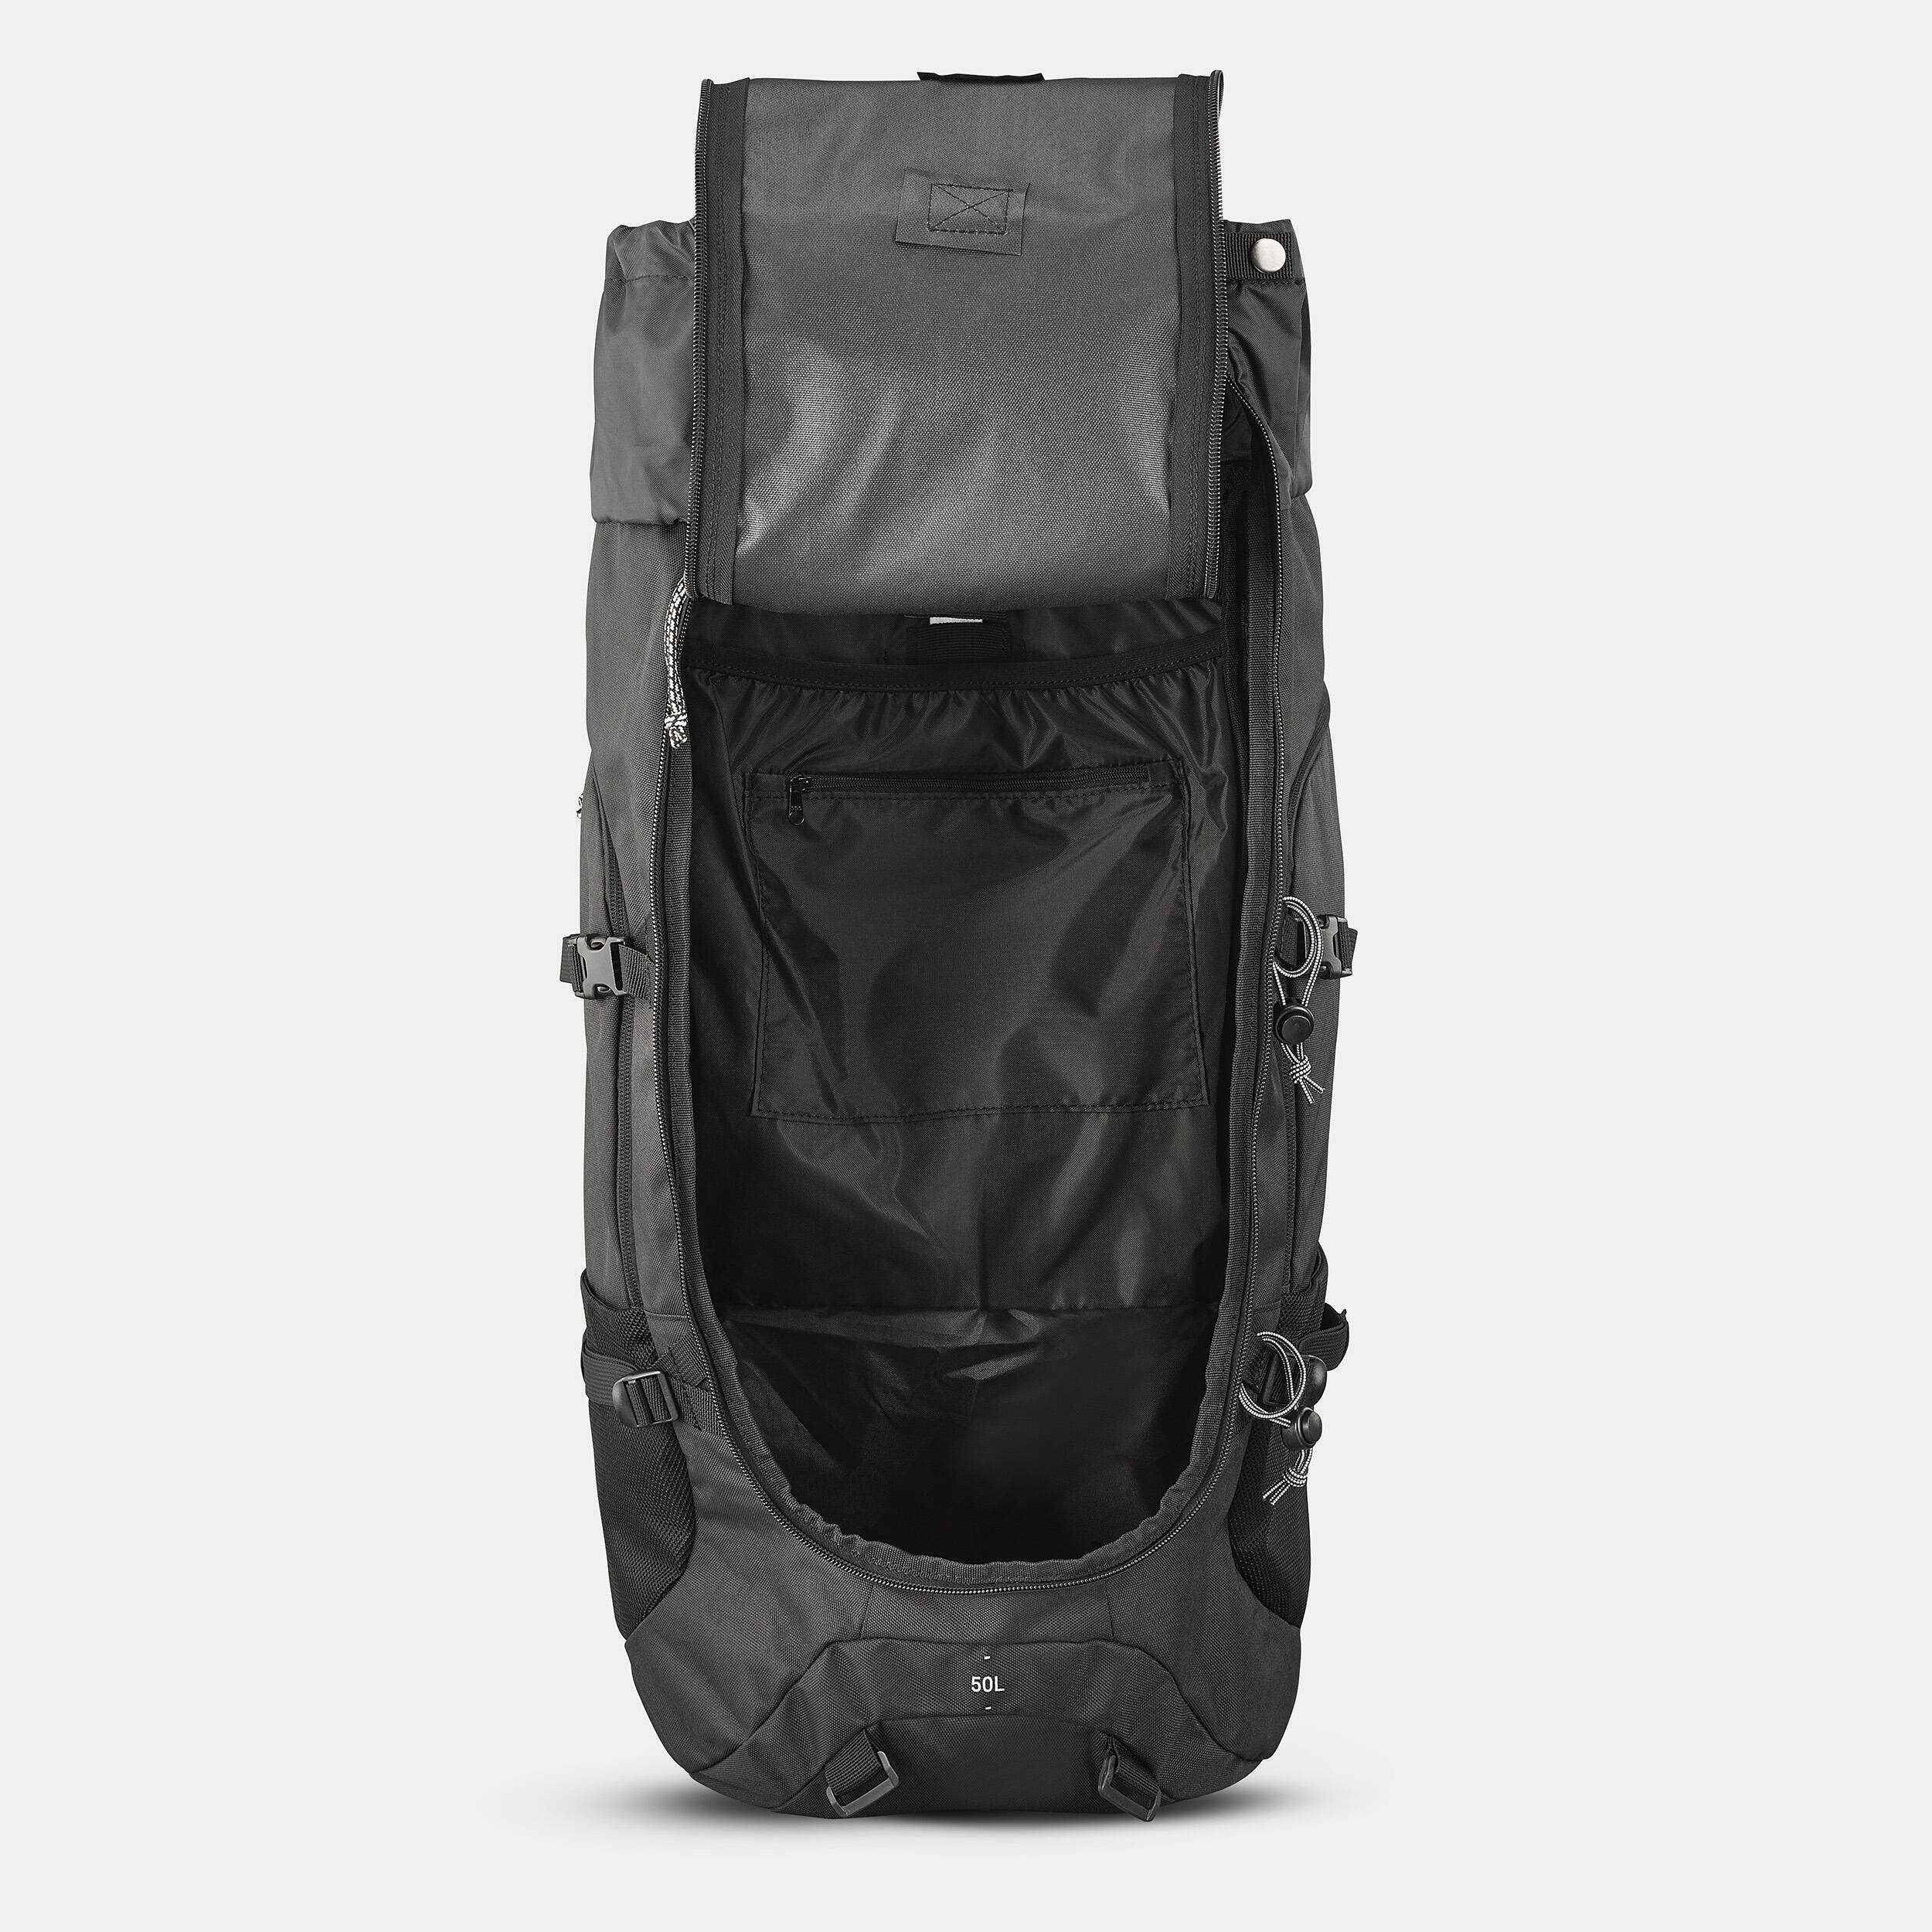 Travel backpack 50L - Travel 100 8/20